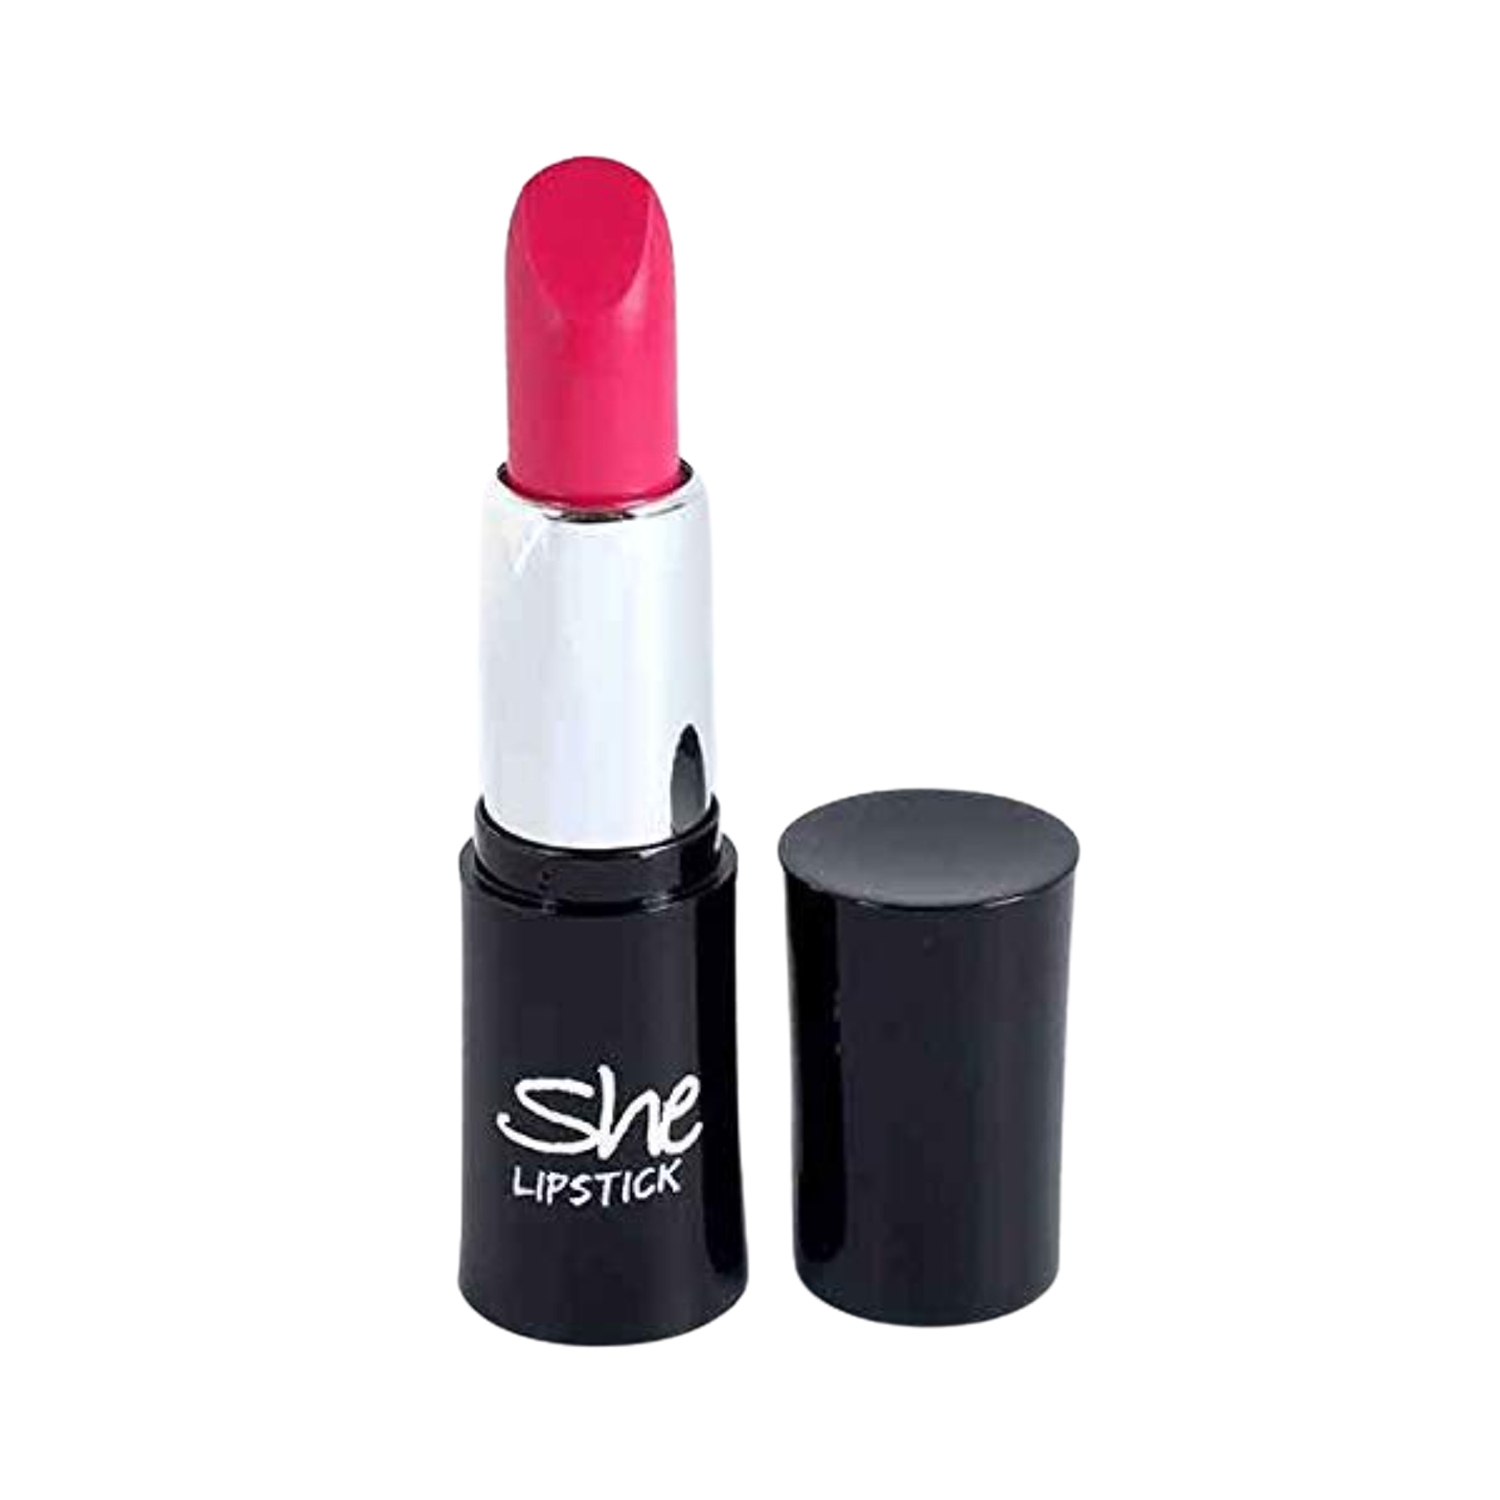 She | She Super Shine Lipstick - 01 Shade (4.5g)